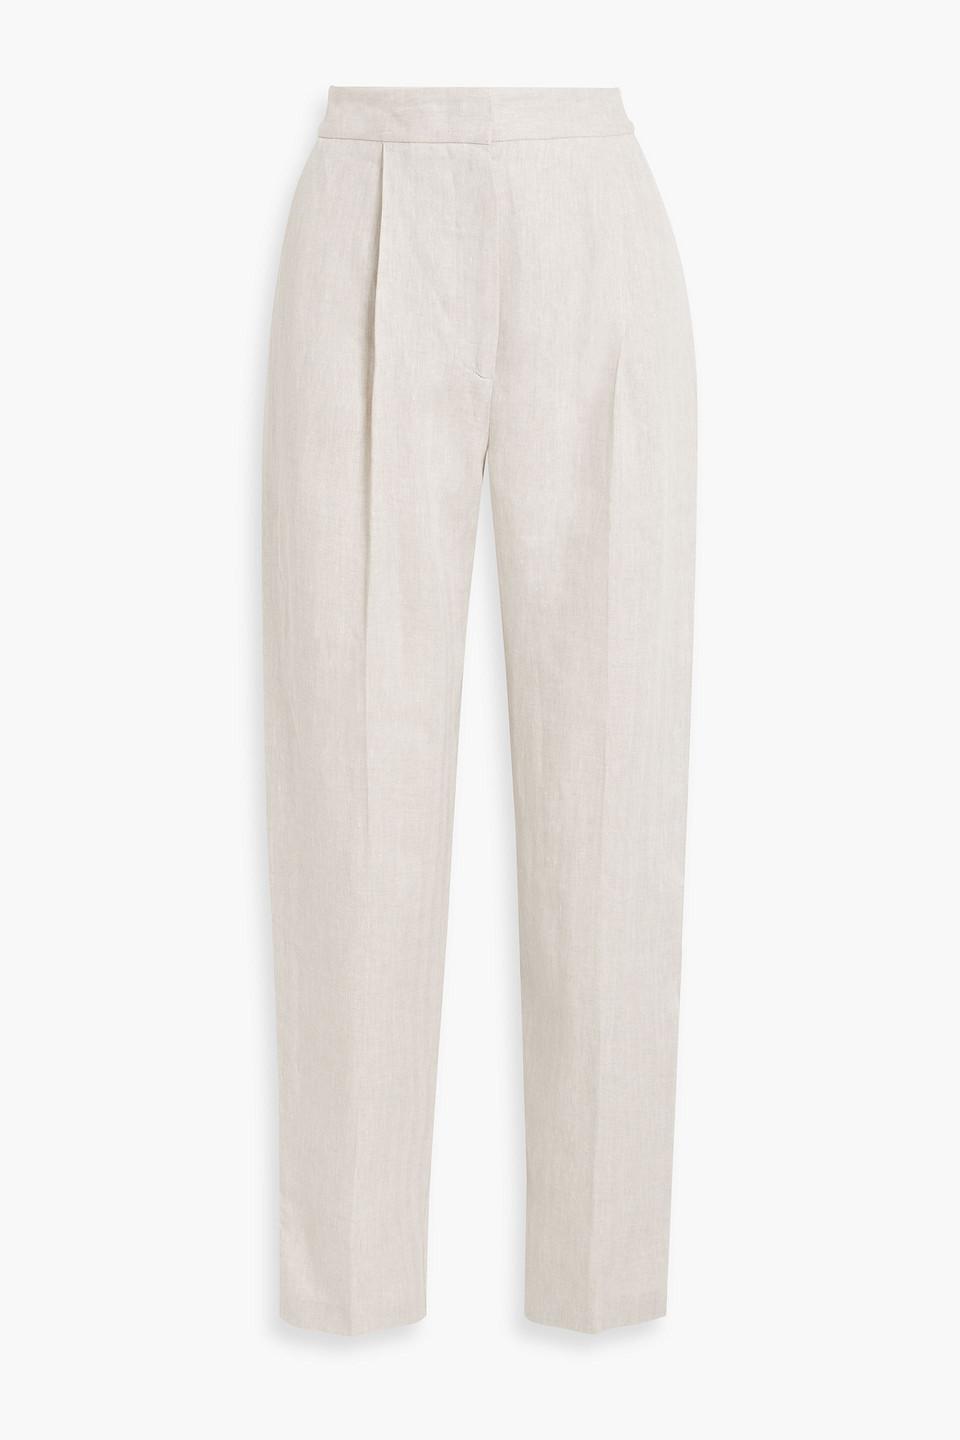 Iris & Ink Lilah Herringbone Linen Tapered Pants in White | Lyst Canada